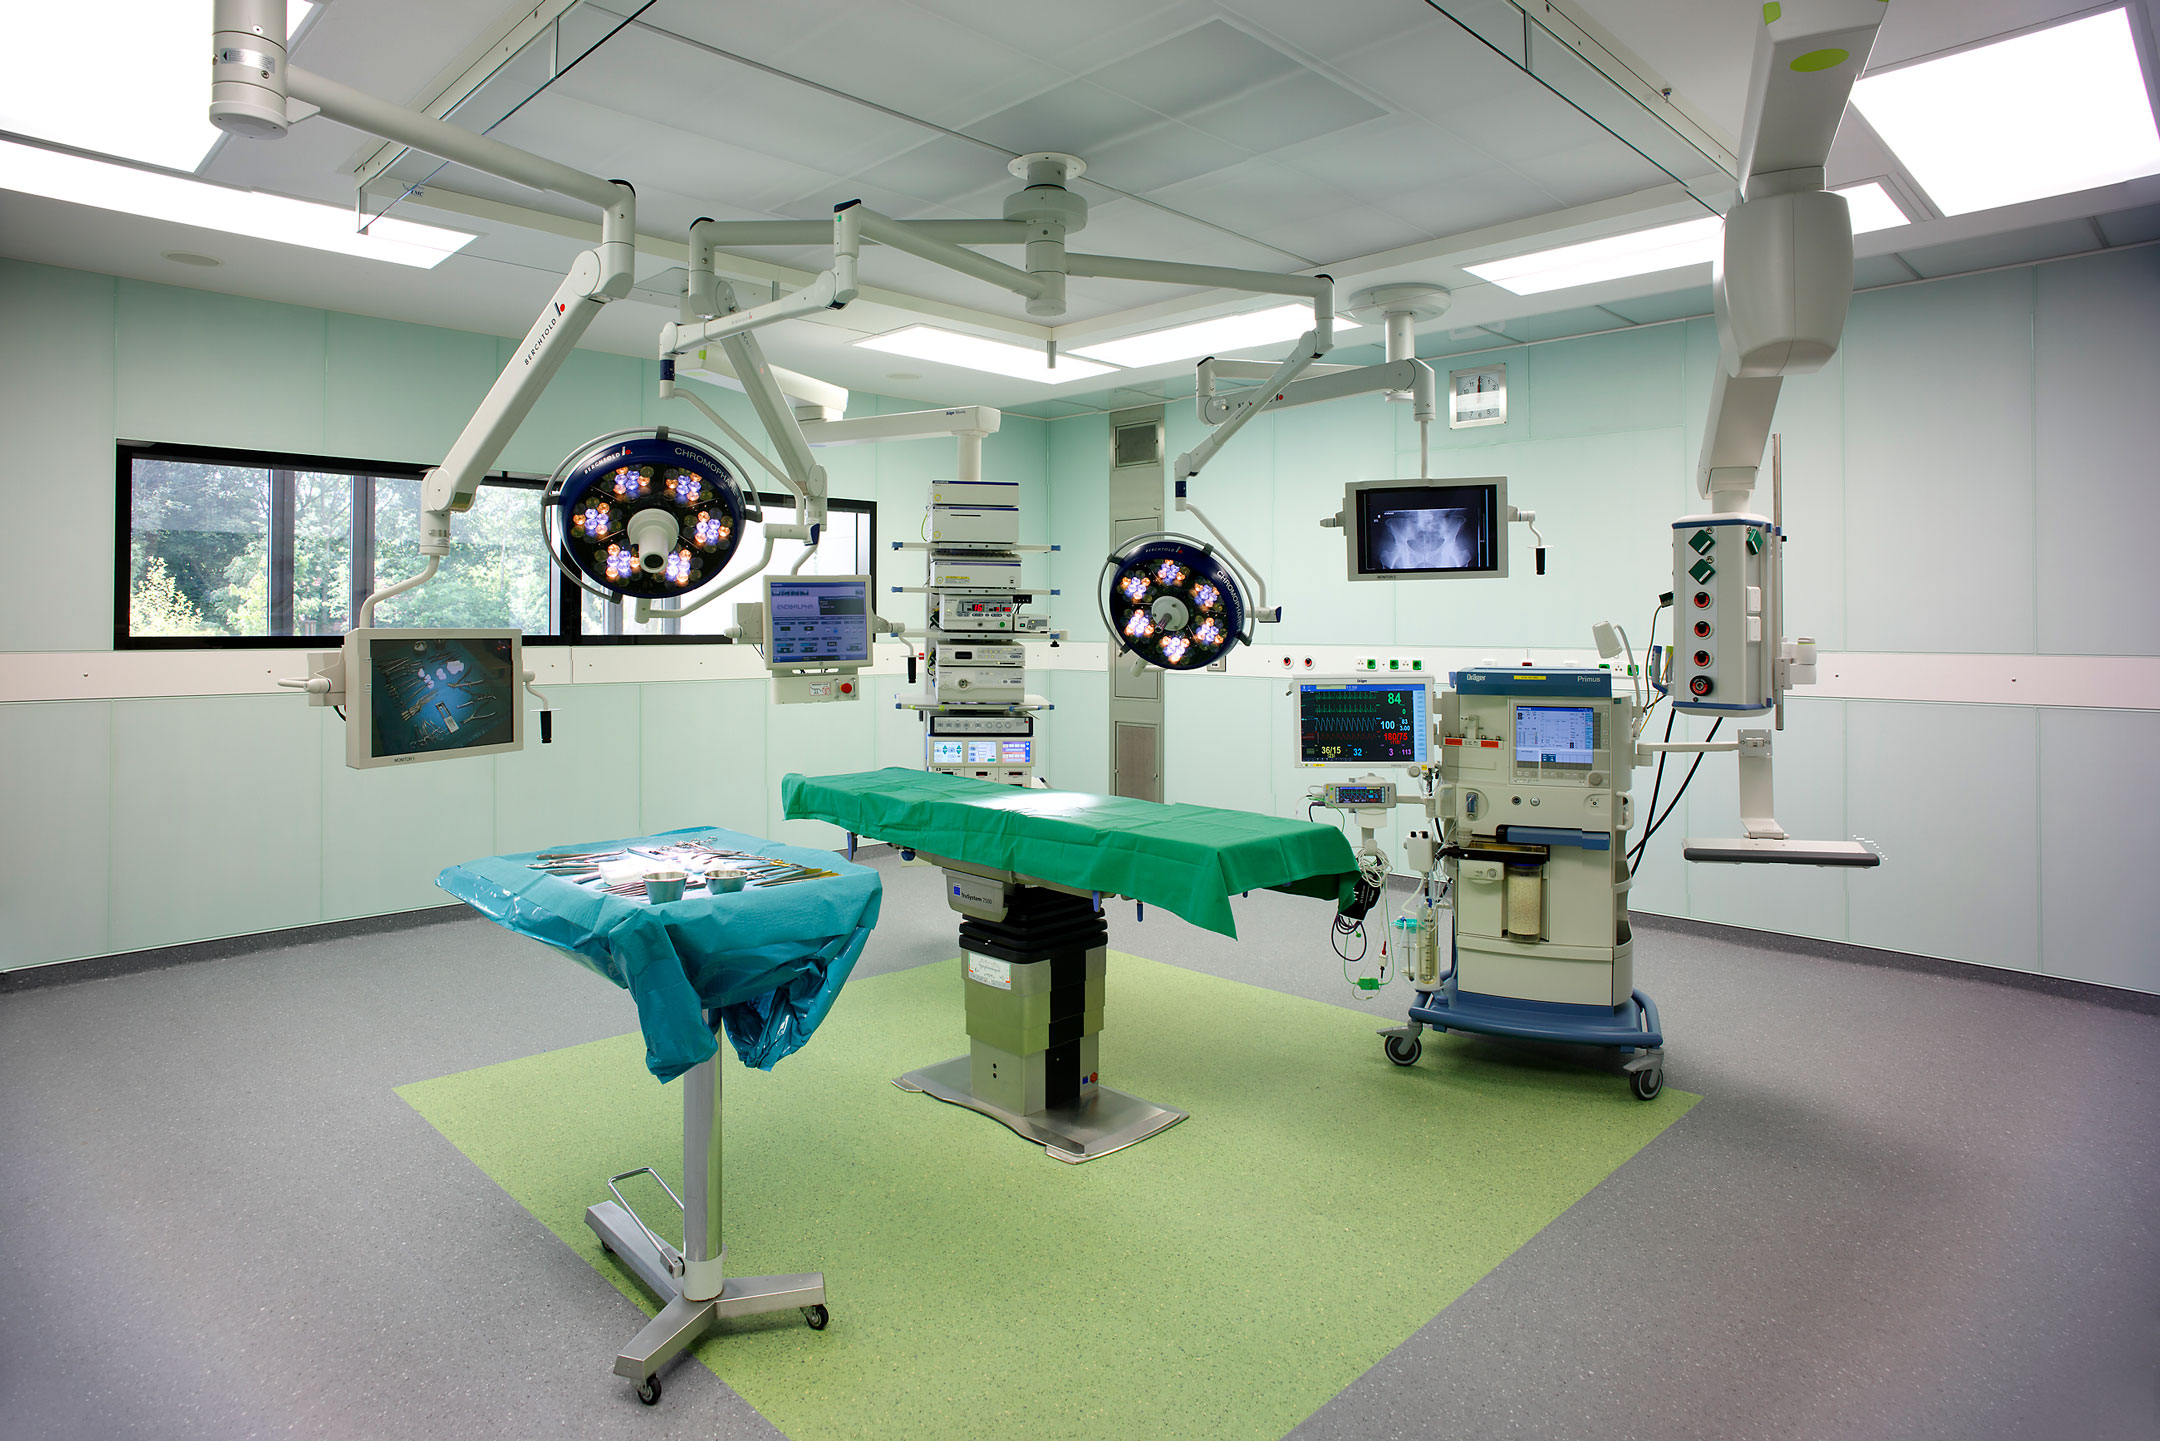 Operationssaal mit technologischen Geräten